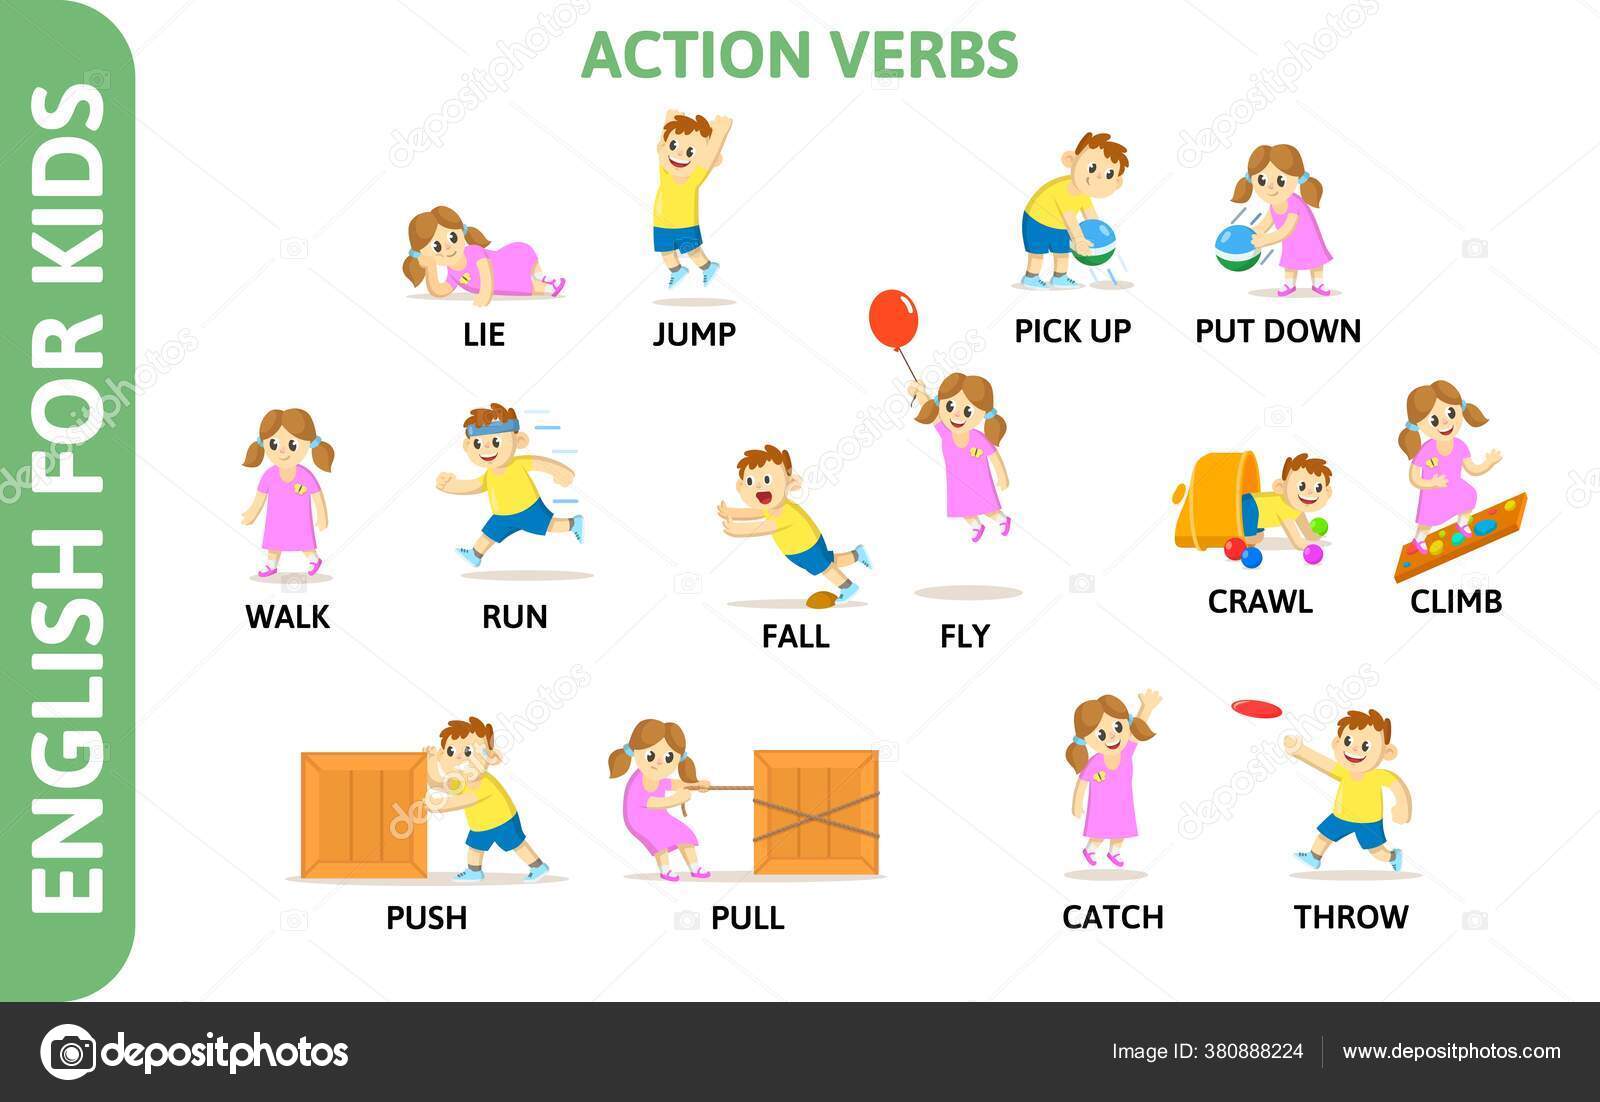 Jogo de cartas – Playing with verbs – Time to Play